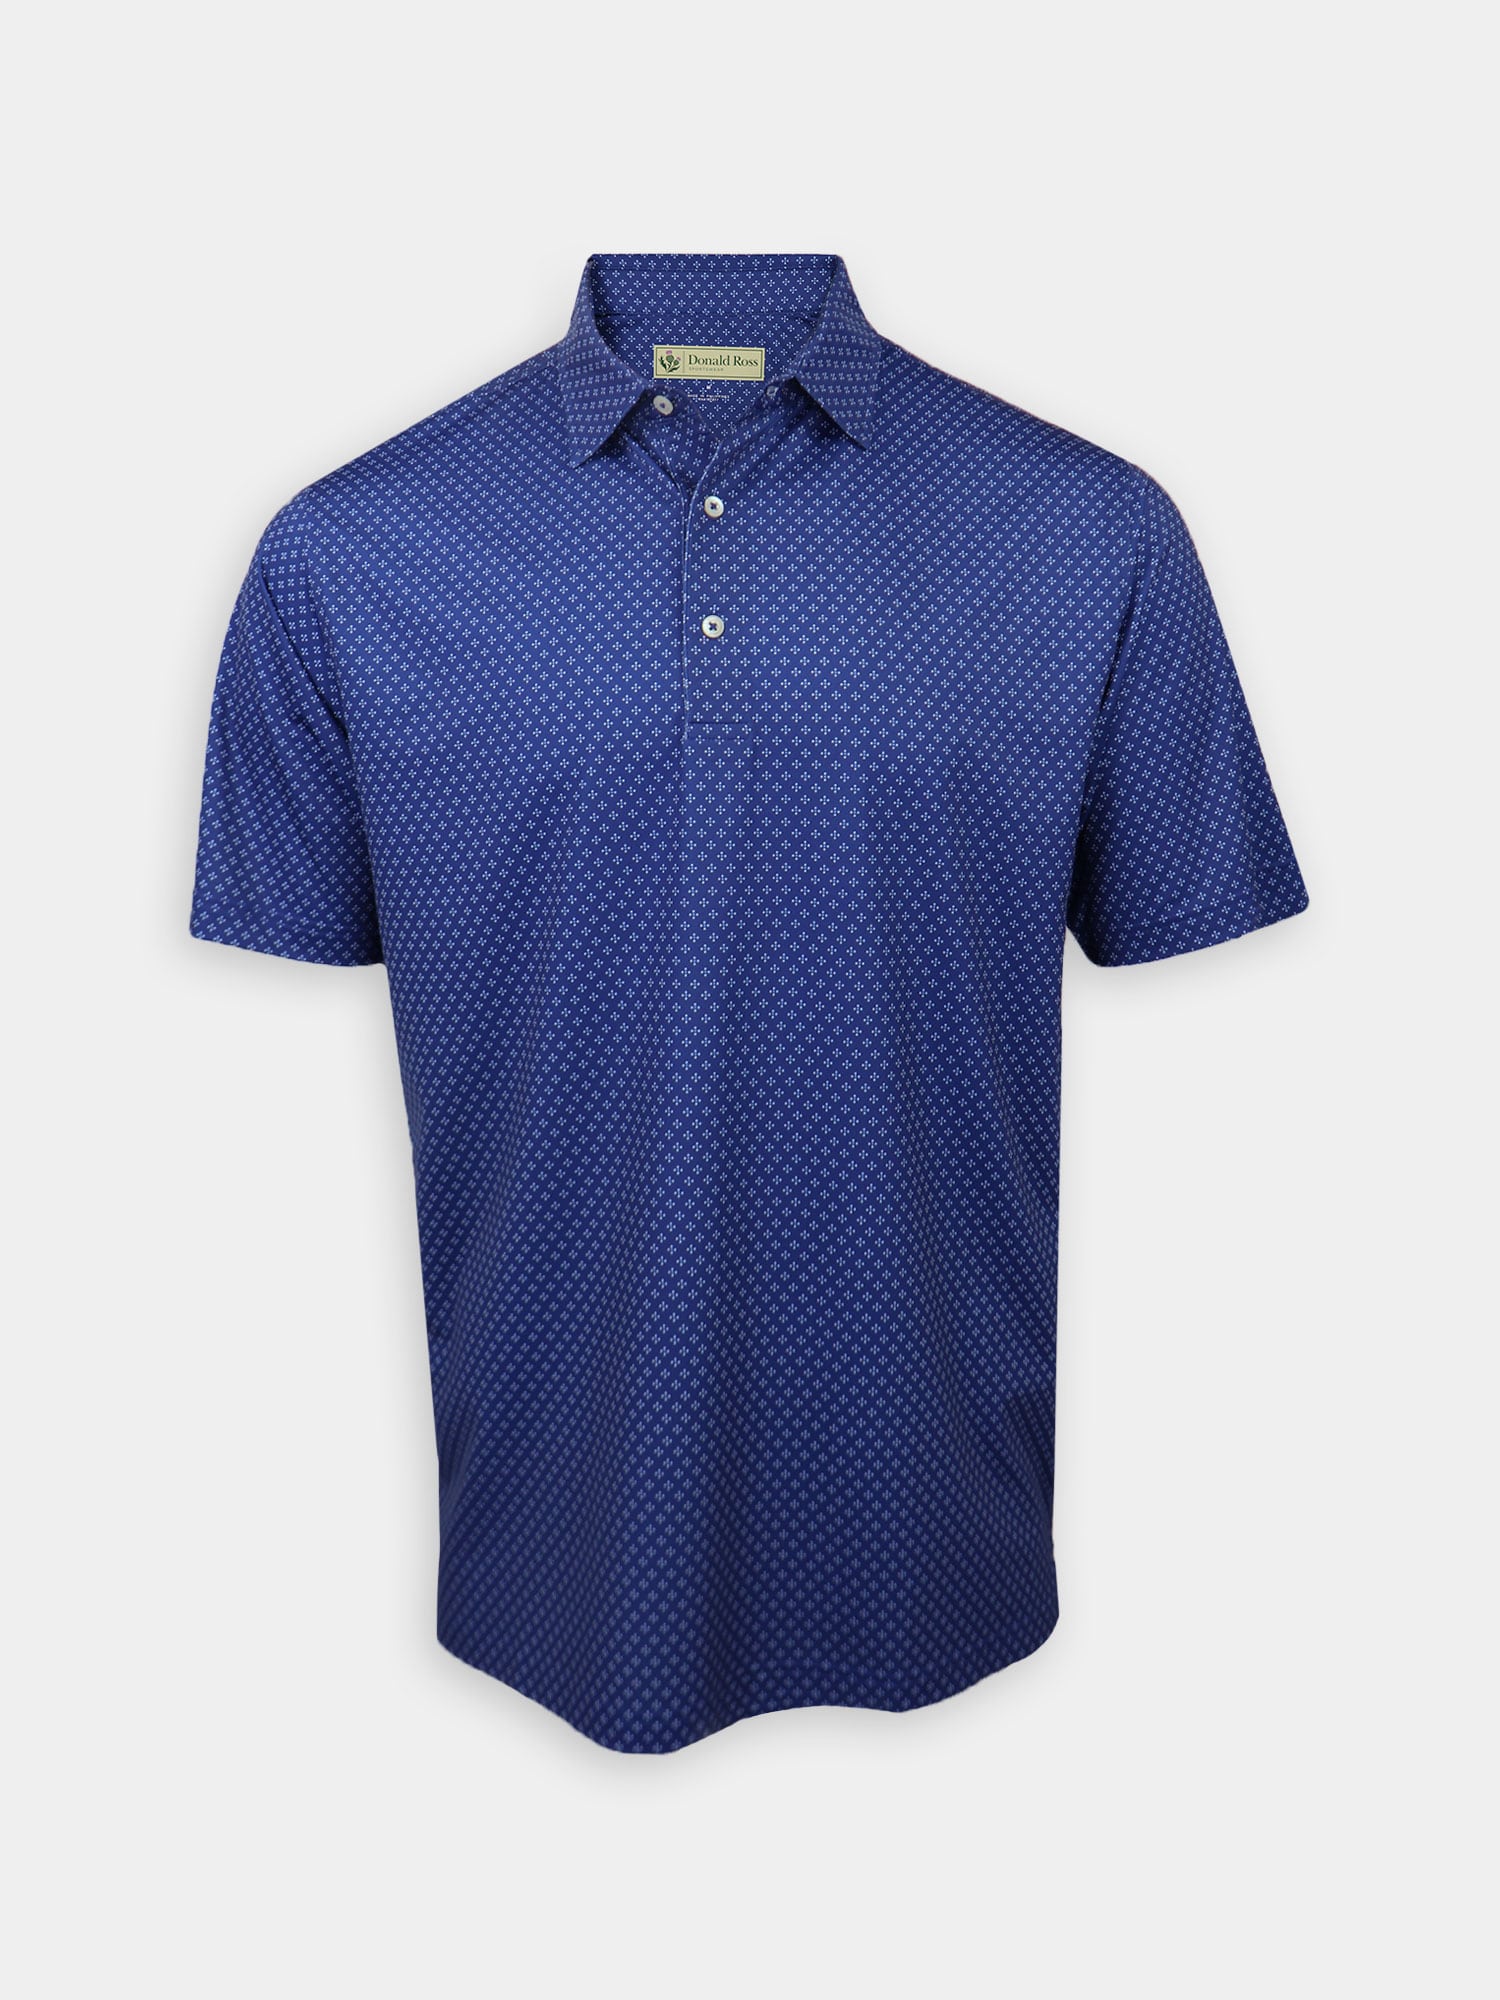 Diamond Print Golf Shirt | Collared Performance Polo | Short Sleeve